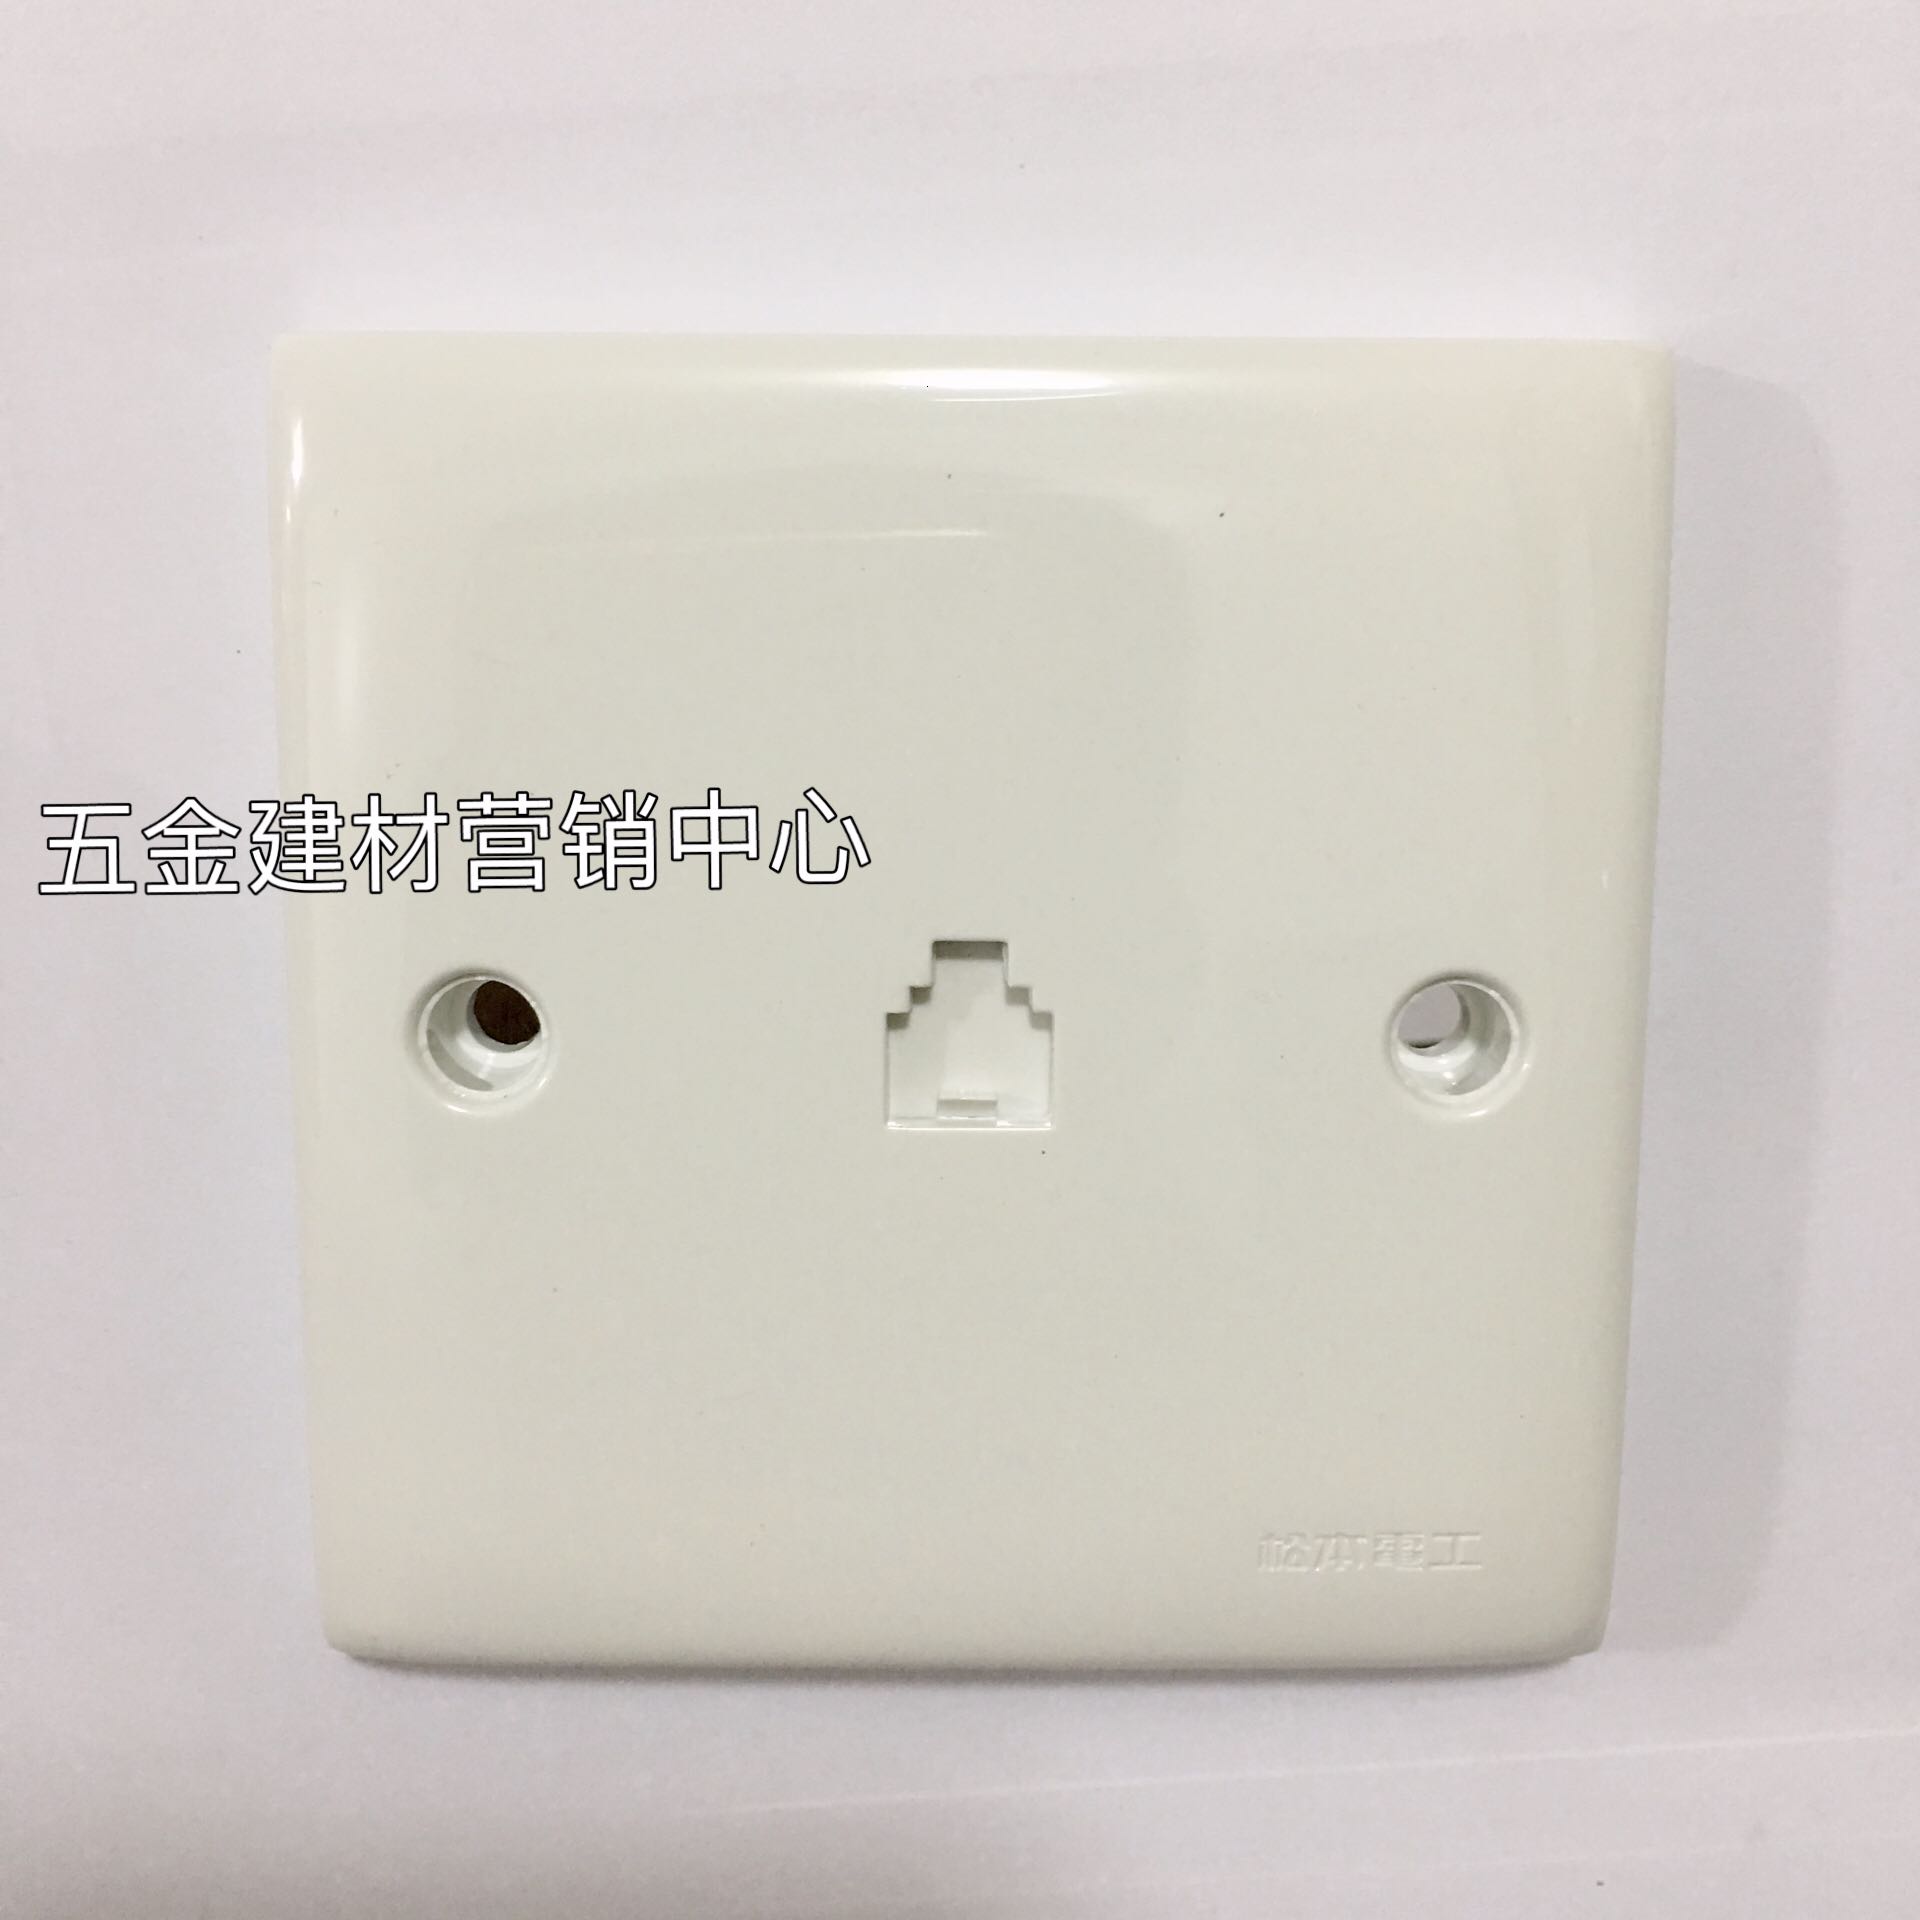 SOBEN/Matsumoto B4 series one-four-wire telephone socket-American Matsumoto socket switch with door